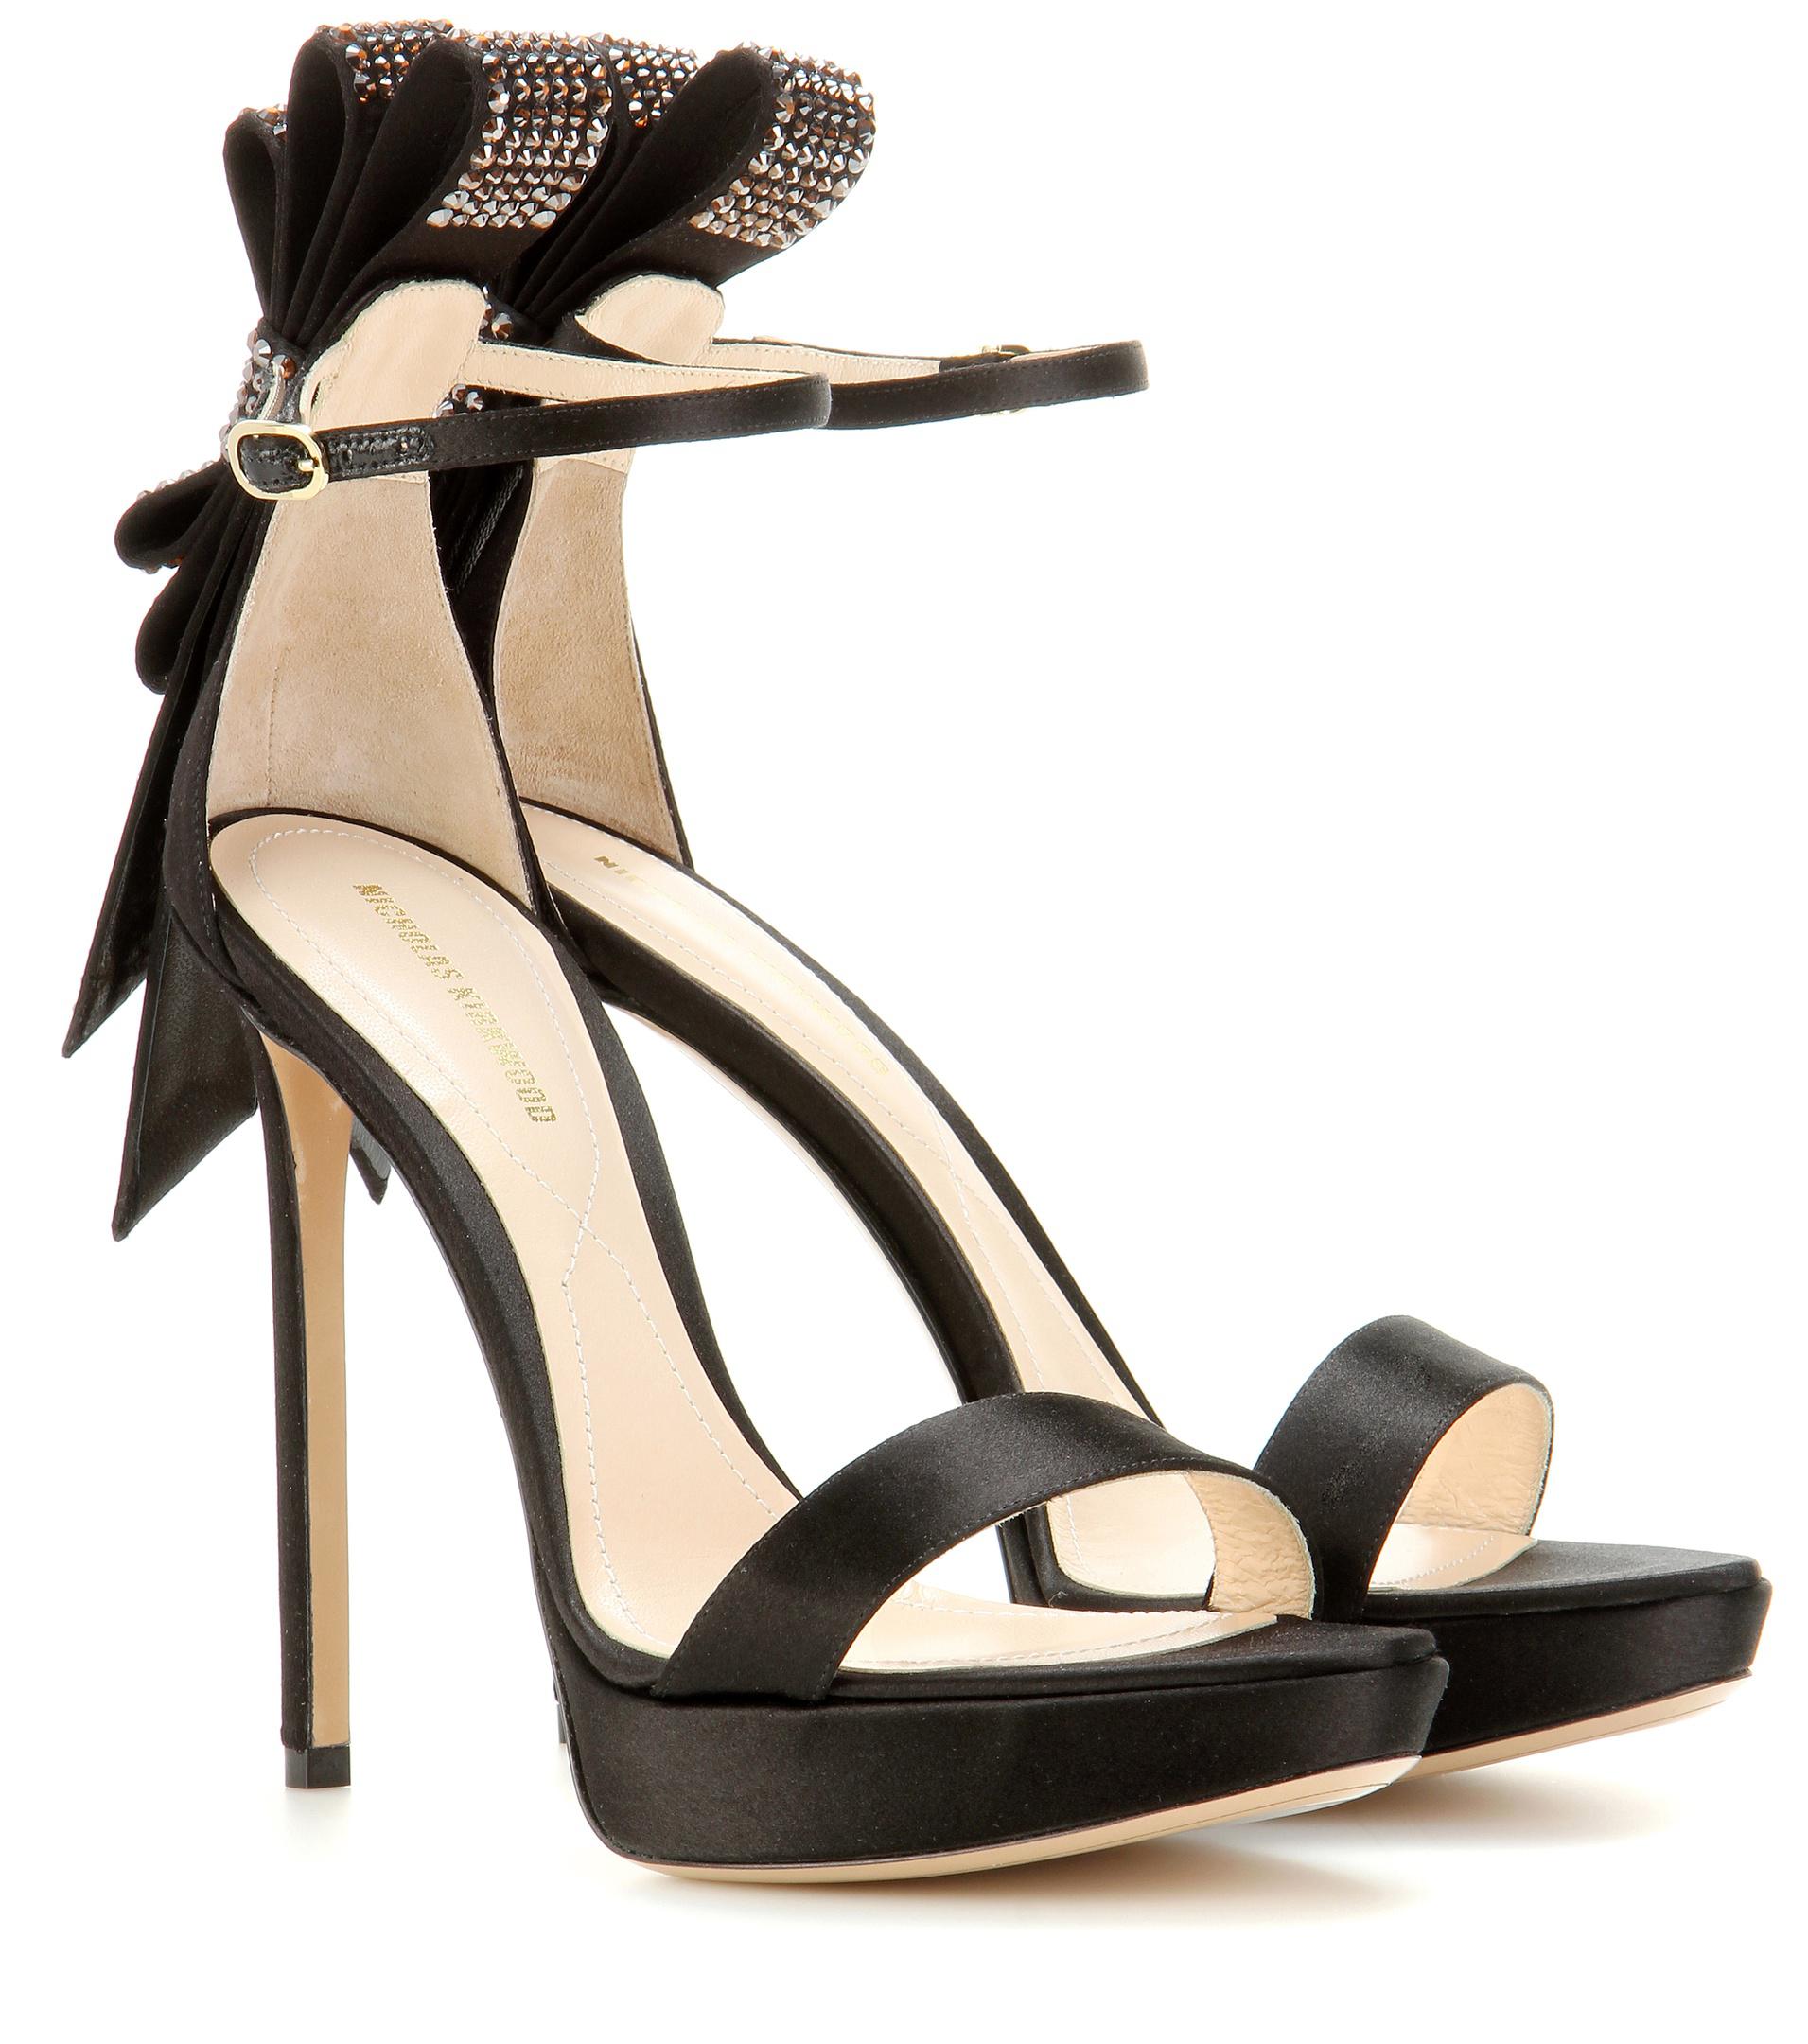 Lyst - Nicholas Kirkwood Faye Embellished Sandals in Black